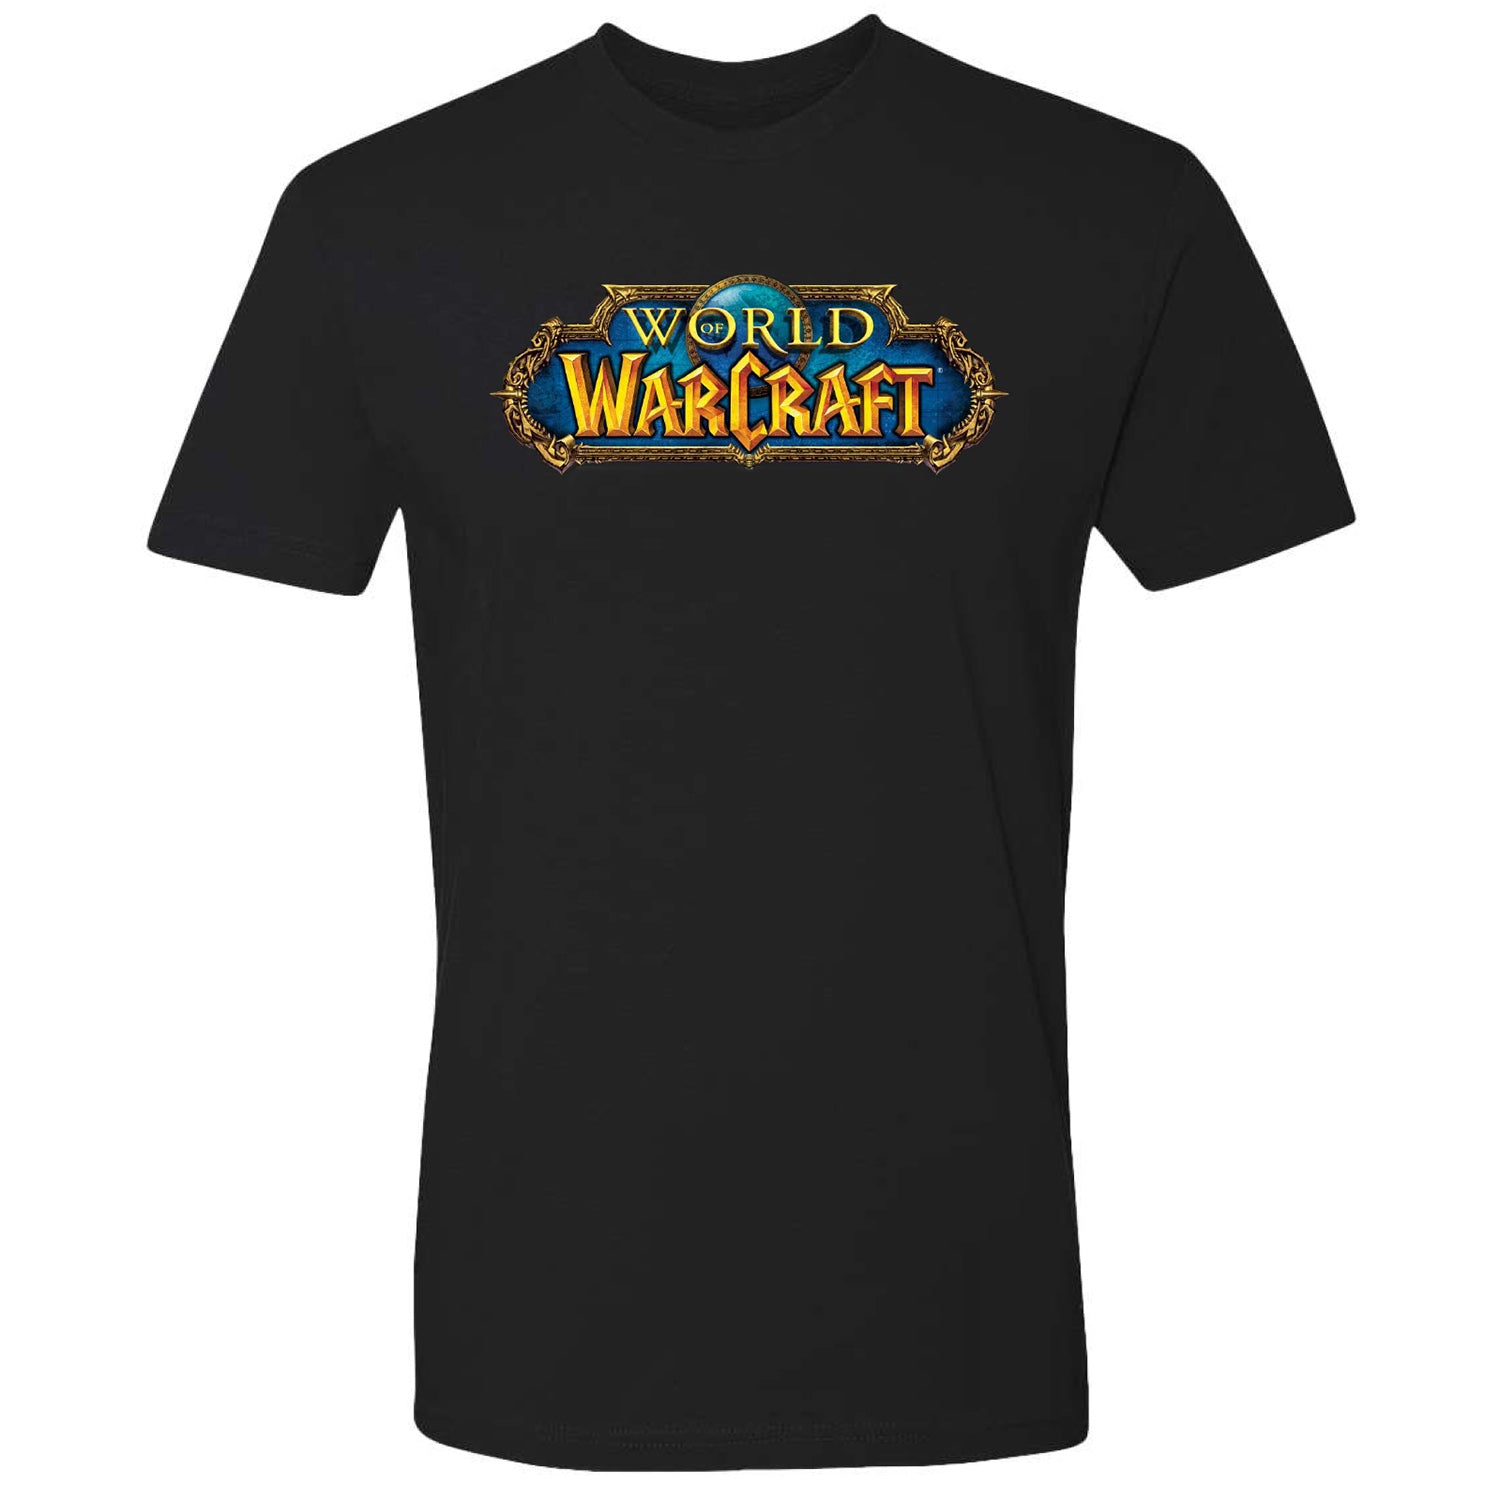 World of Warcraft Logo T-Shirt - Front View Black Version